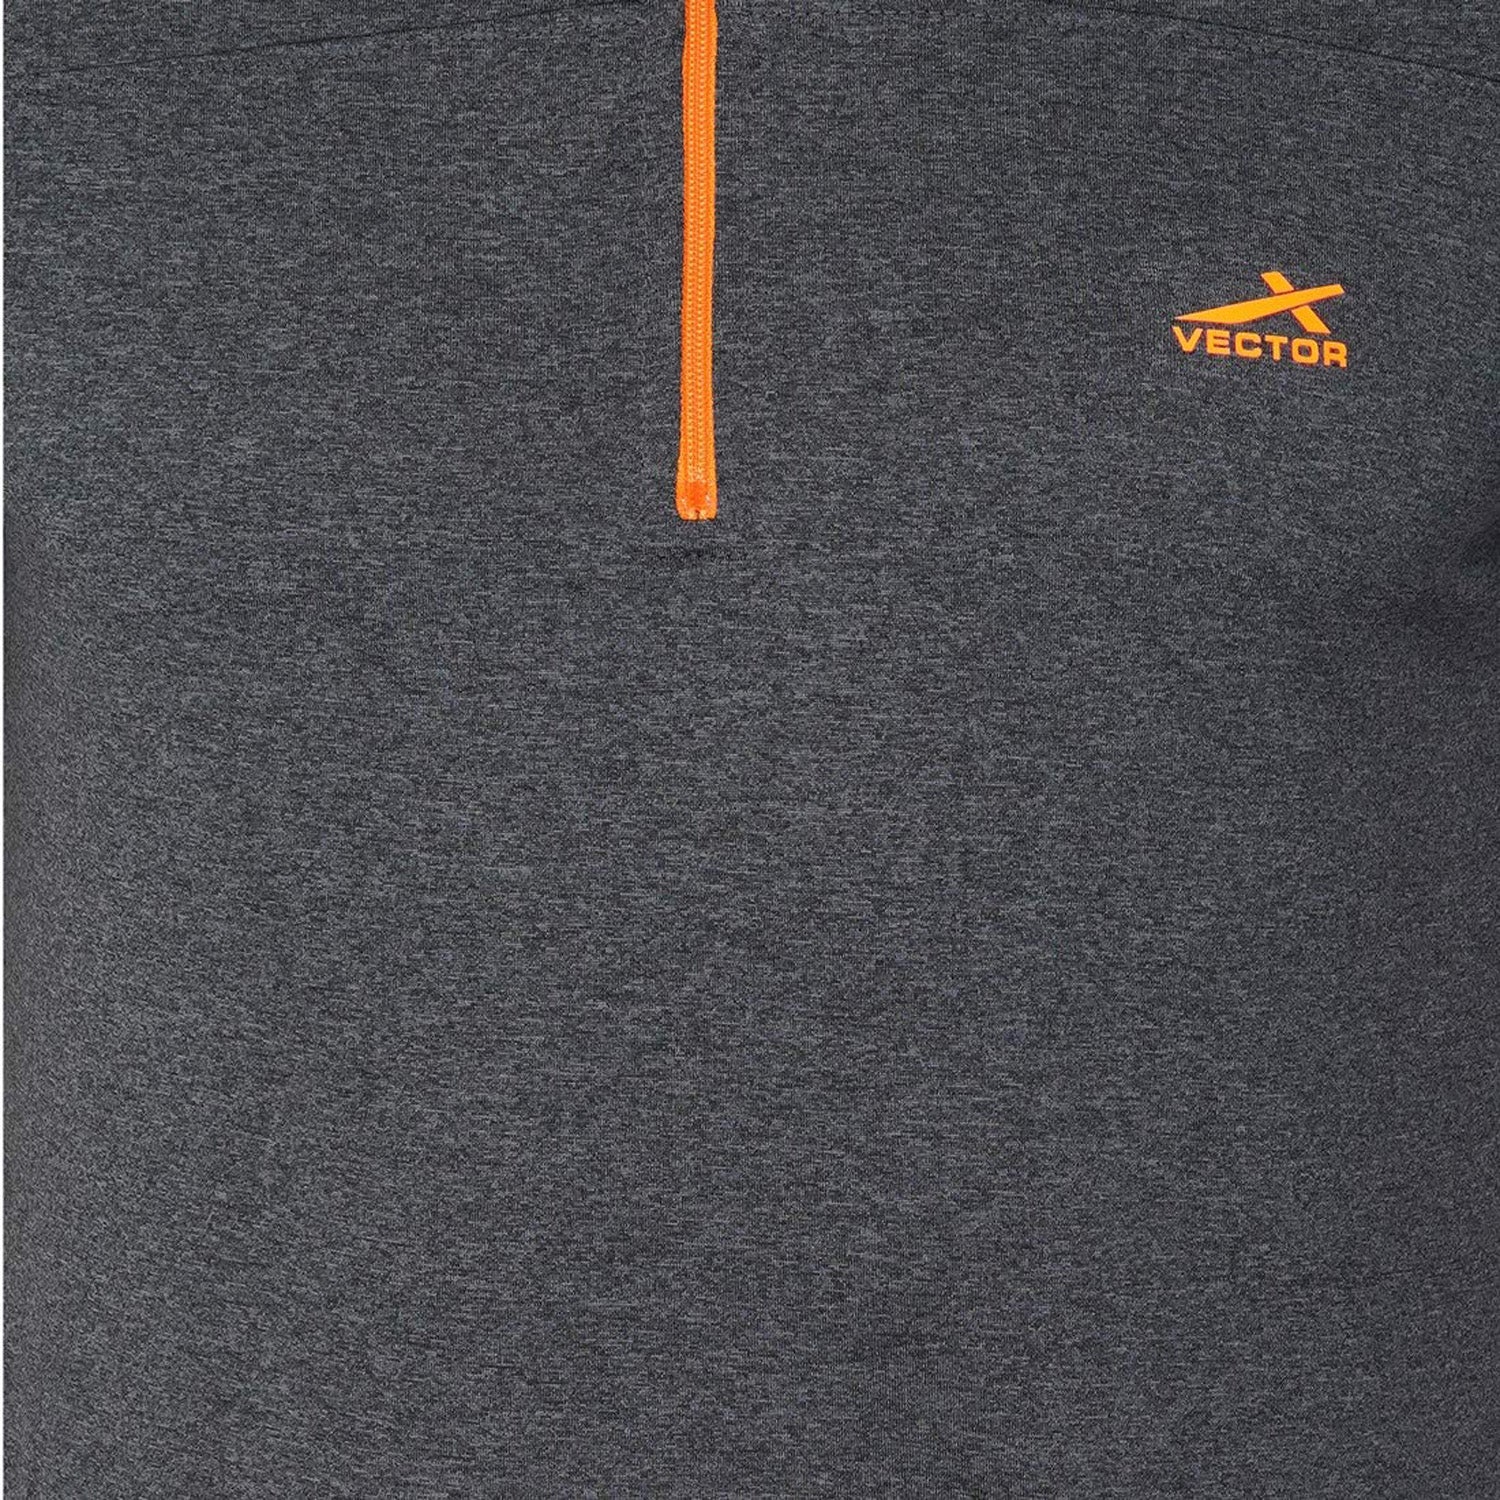 Vector X VTD-055 Men's T-Shirt , Charcoal - Best Price online Prokicksports.com